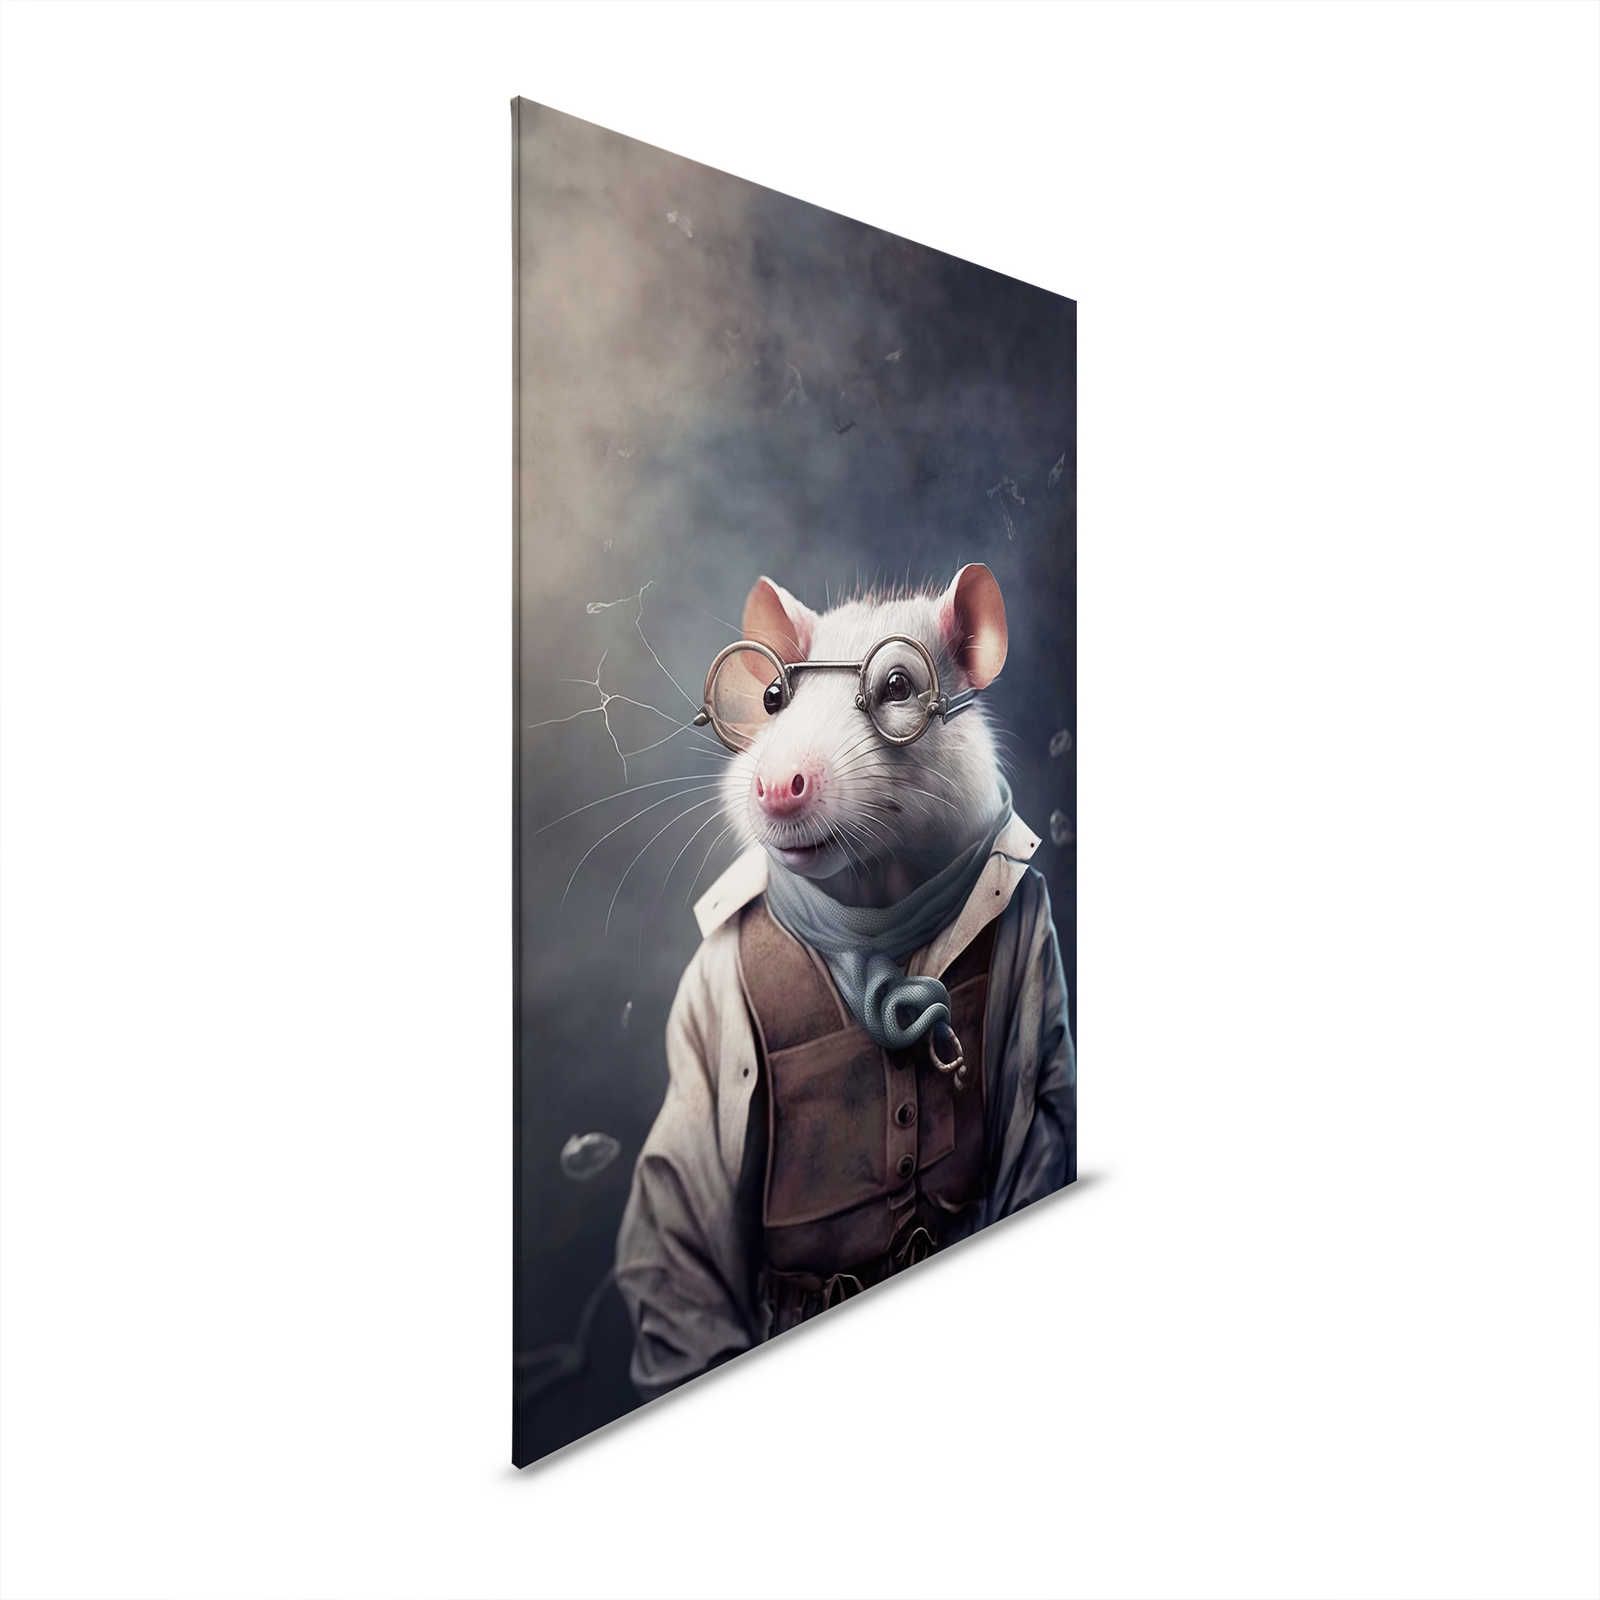         AI canvas picture »scientific rat« - 60 cm x 90 cm
    